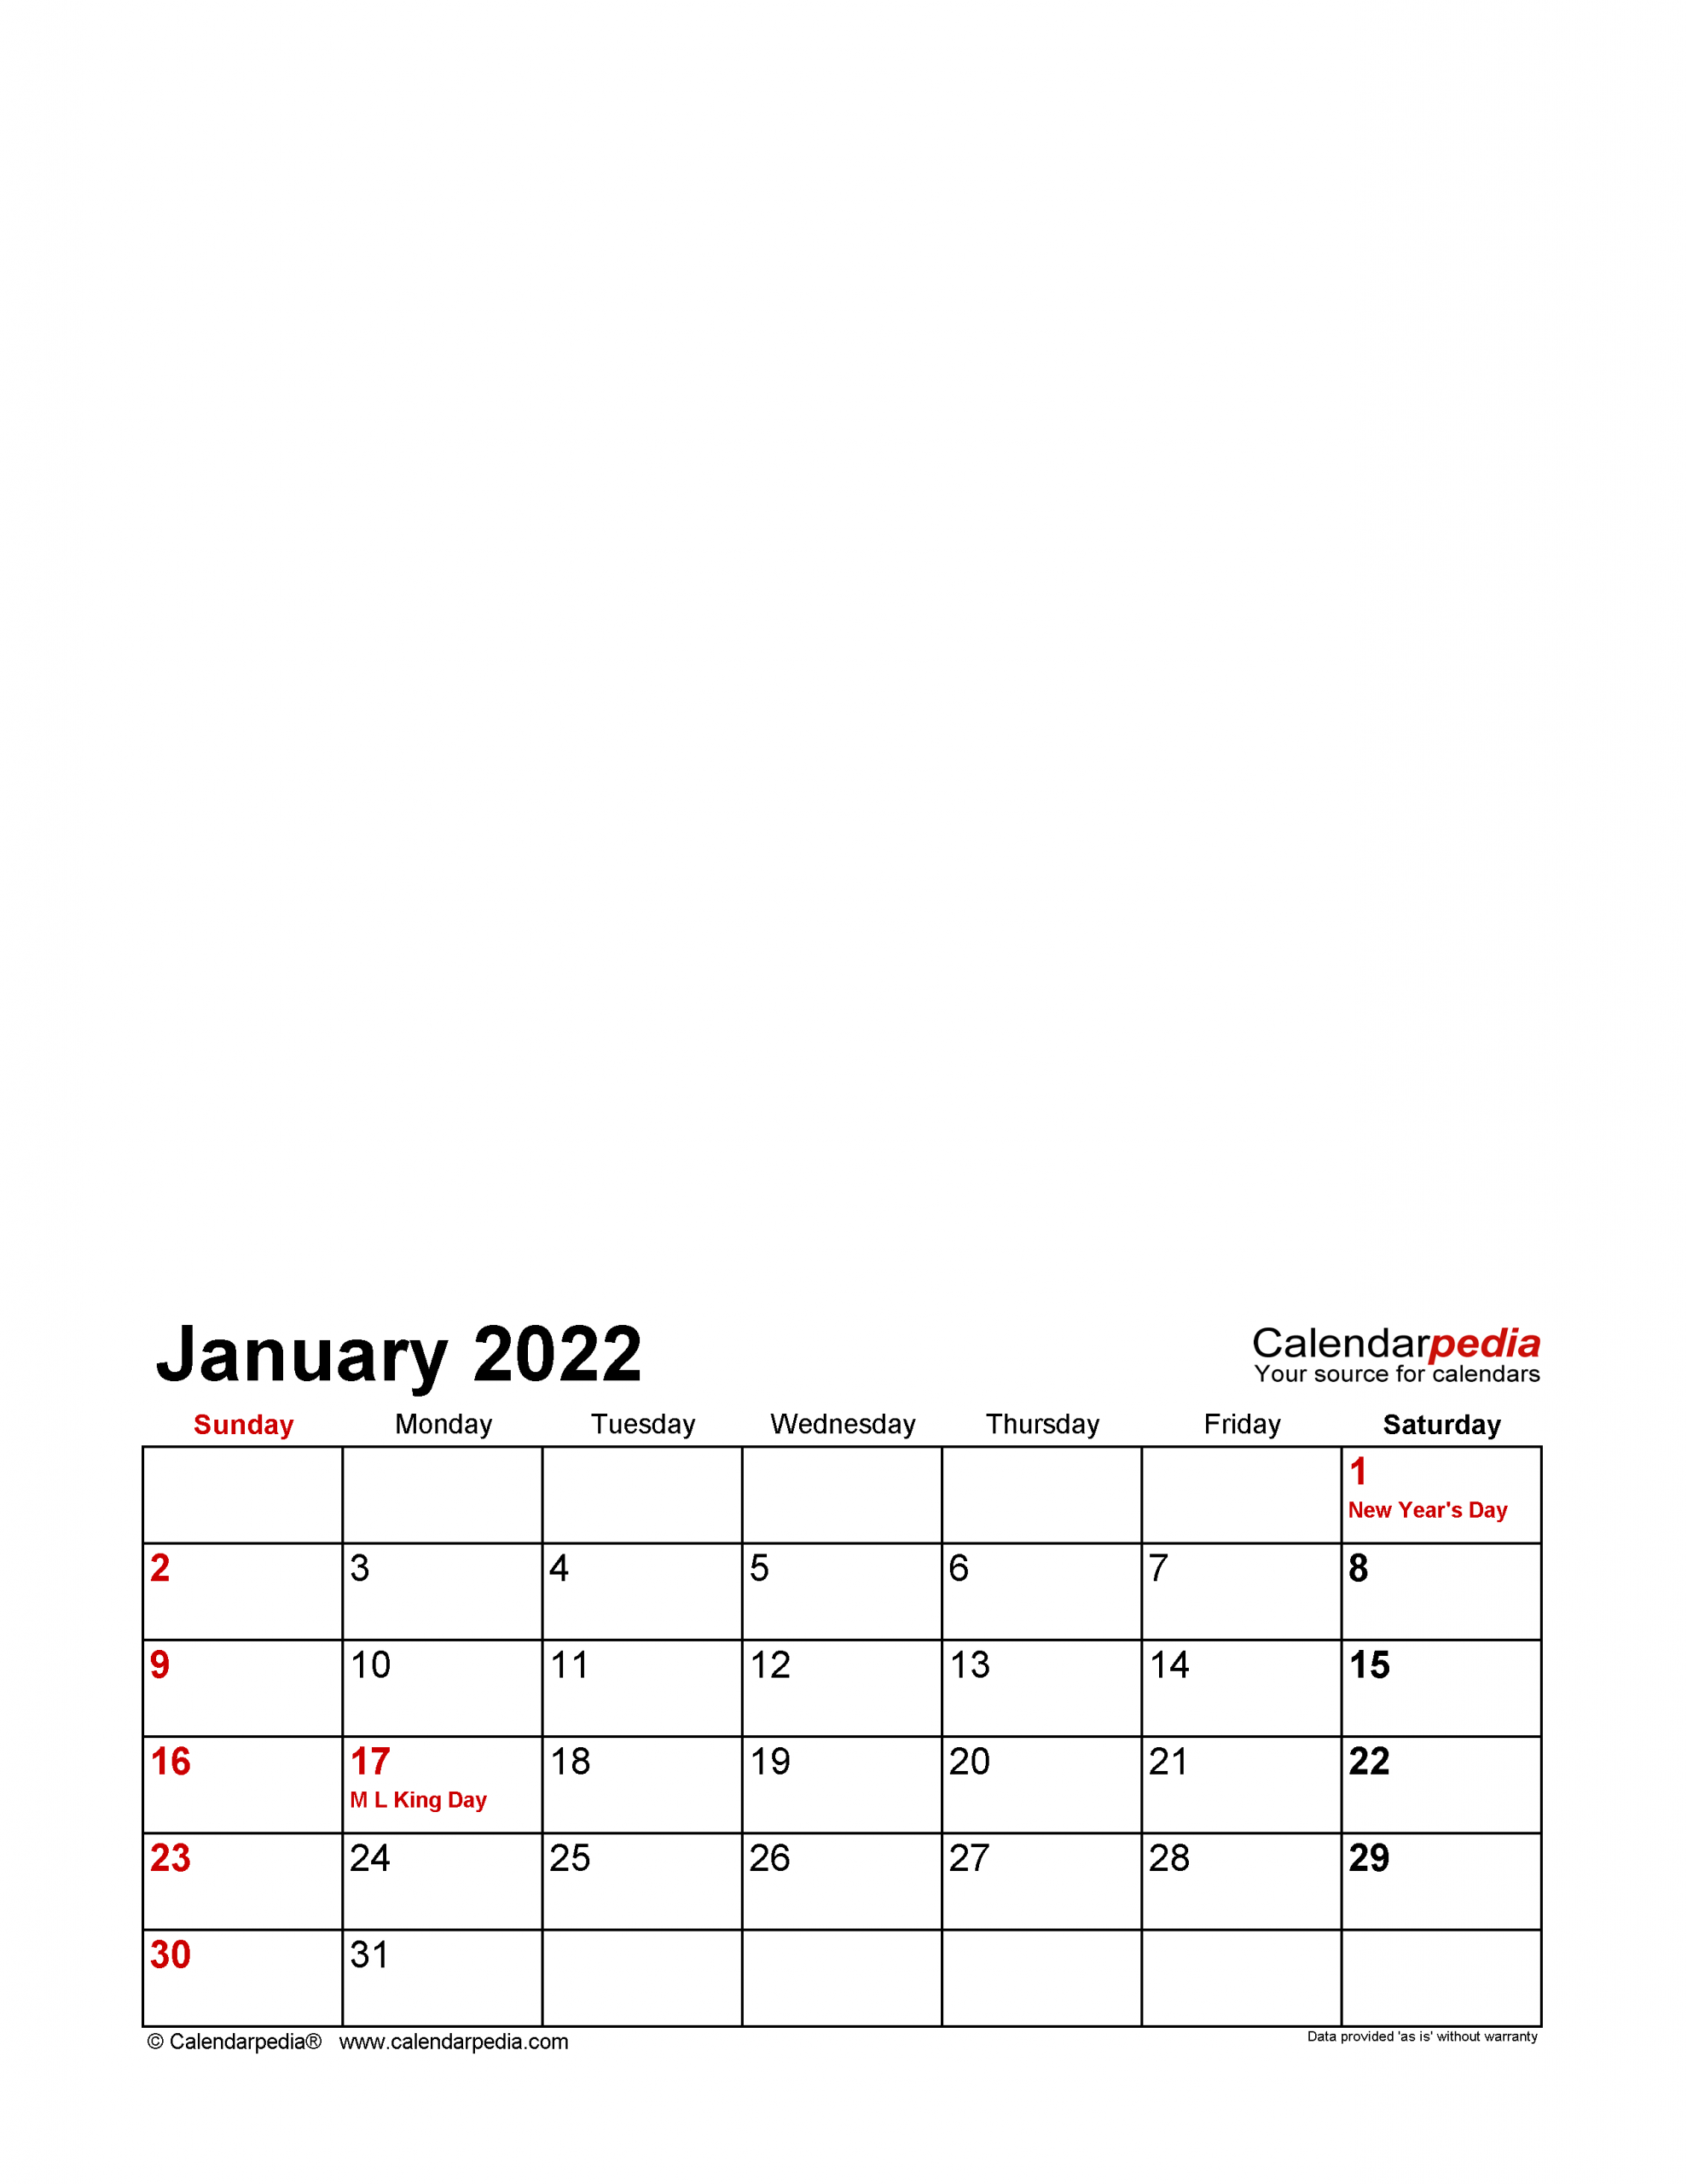 Photo Calendar 2022 - Free Printable Excel Templates